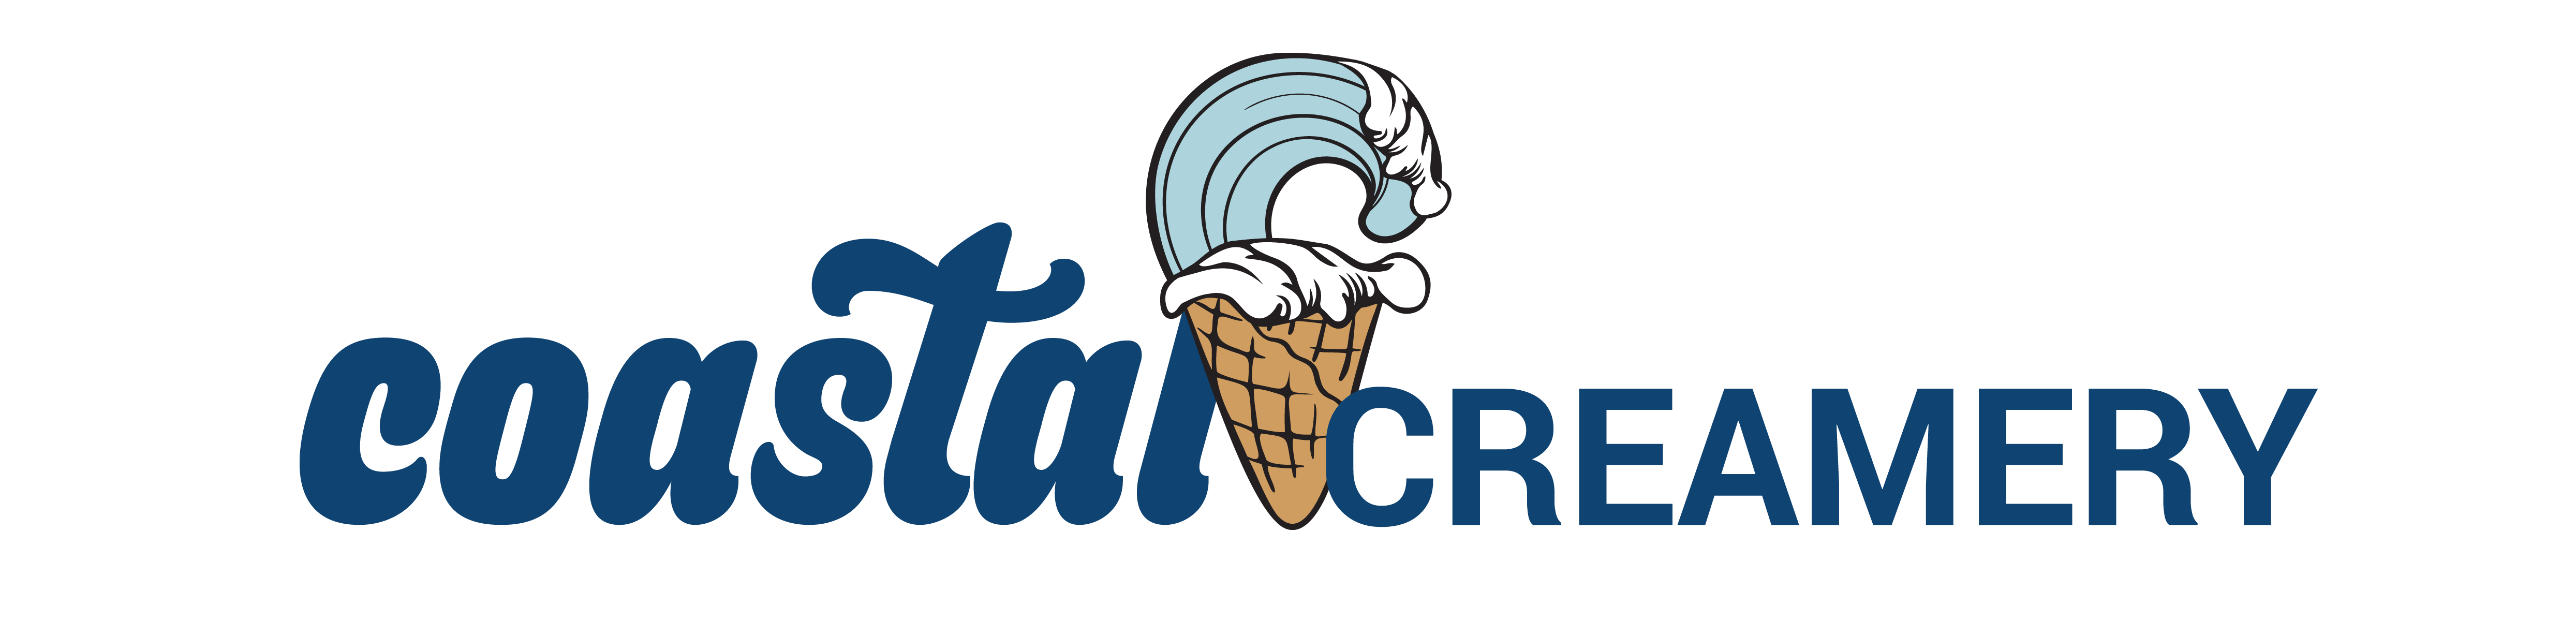 Coastal Creamery Logo, ice cream shop logo